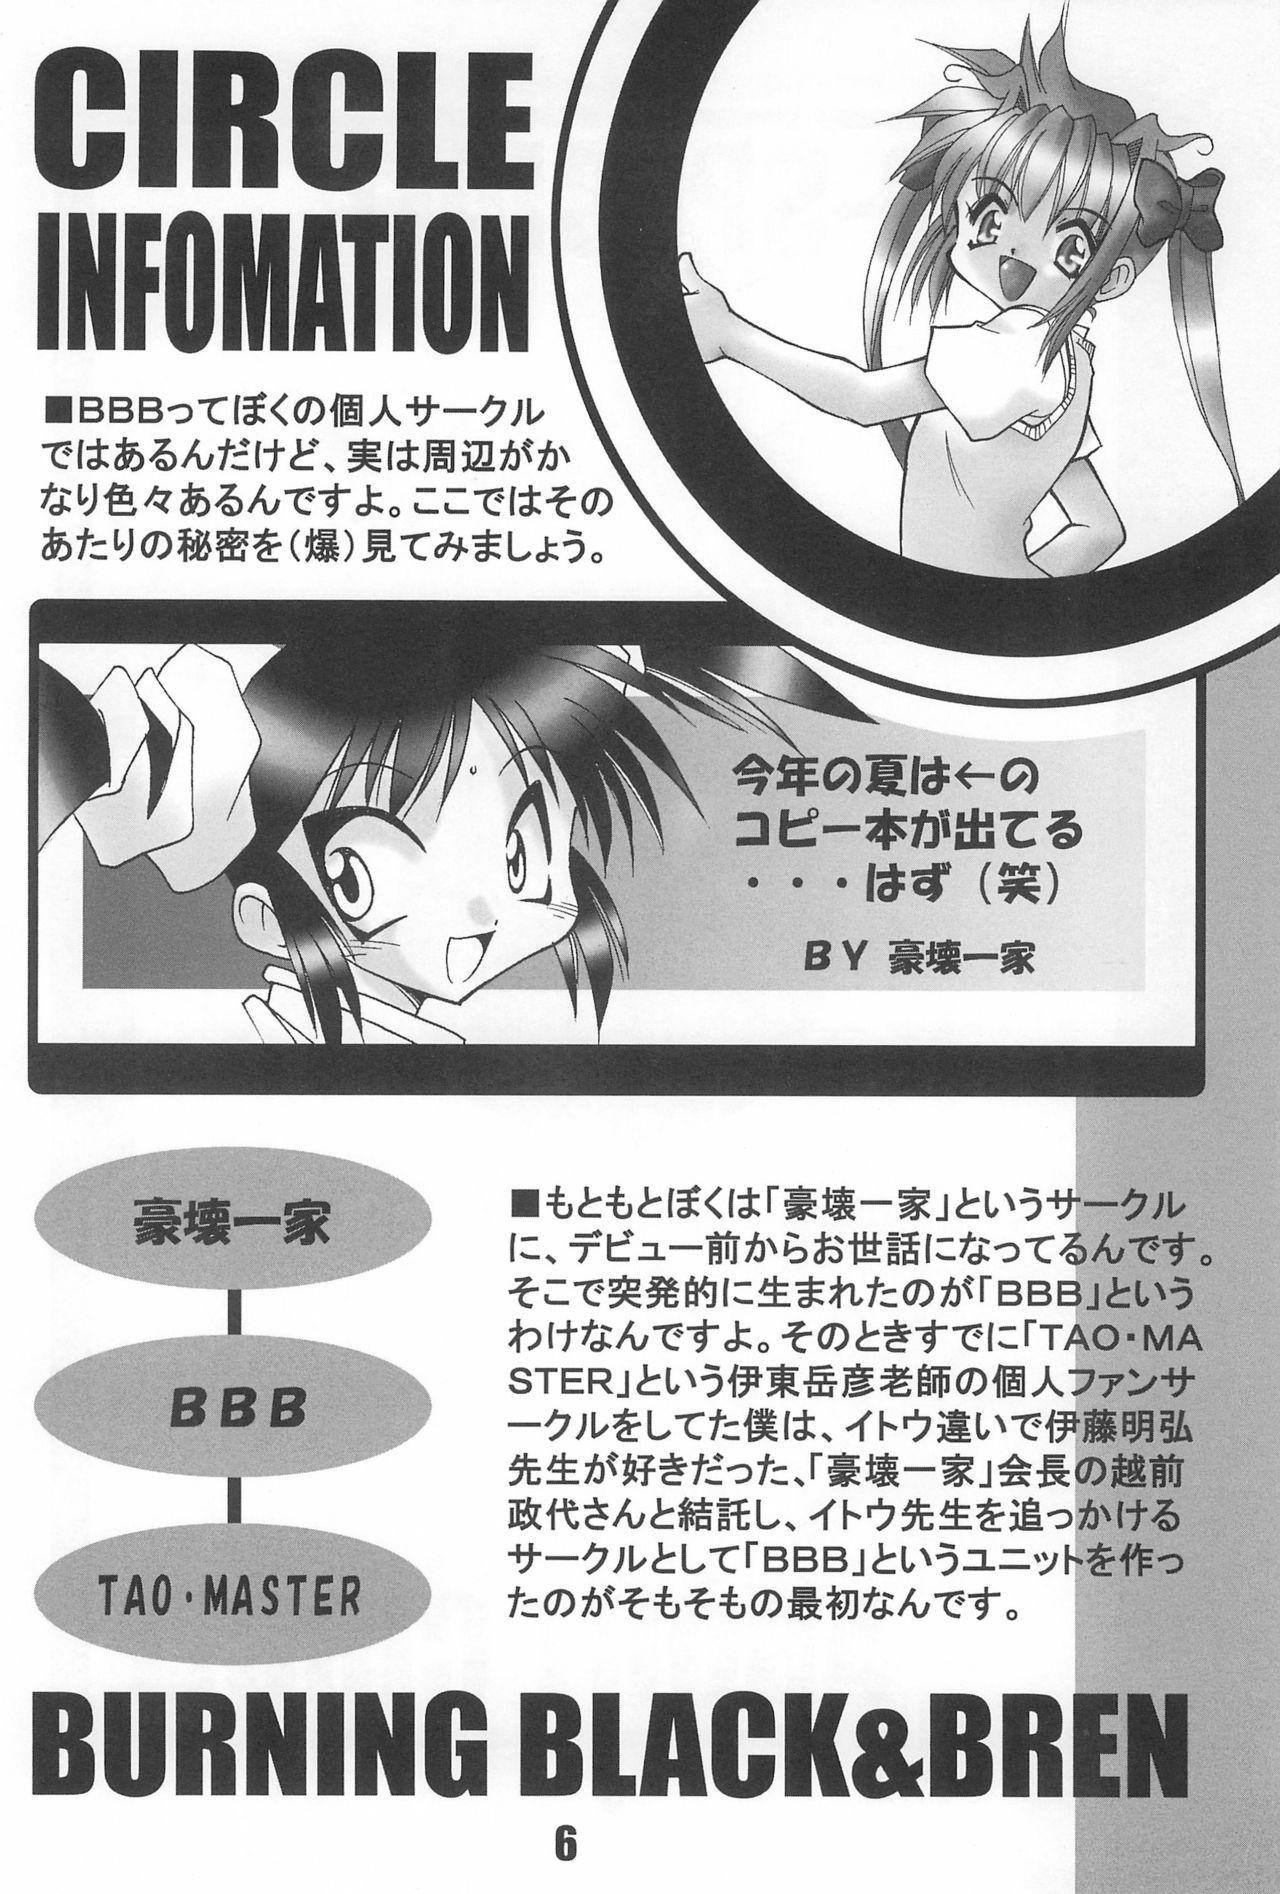 Punish BBB OFFICIAL GUIDE BOOK - Cardcaptor sakura Action - Page 6